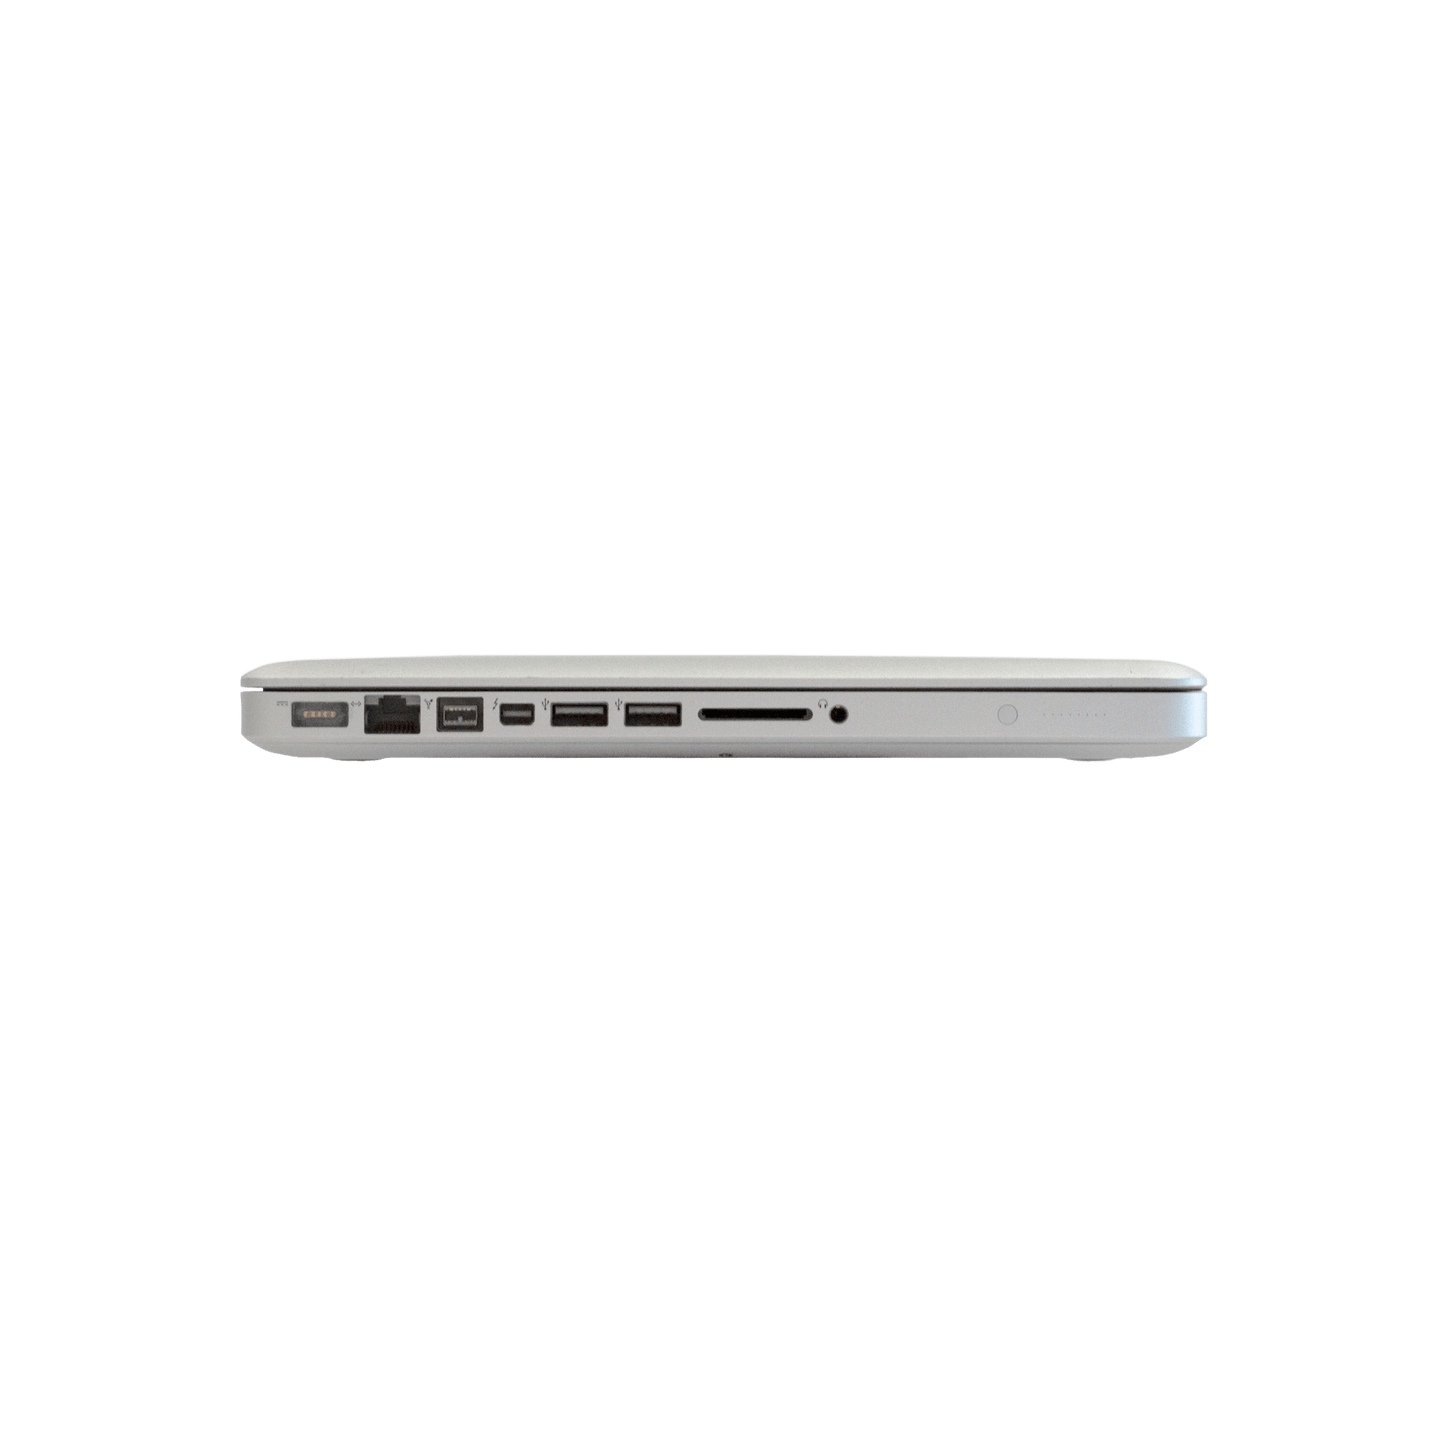 Refurbished MacBook Pro 13" i5 2.5 8gb 120gb